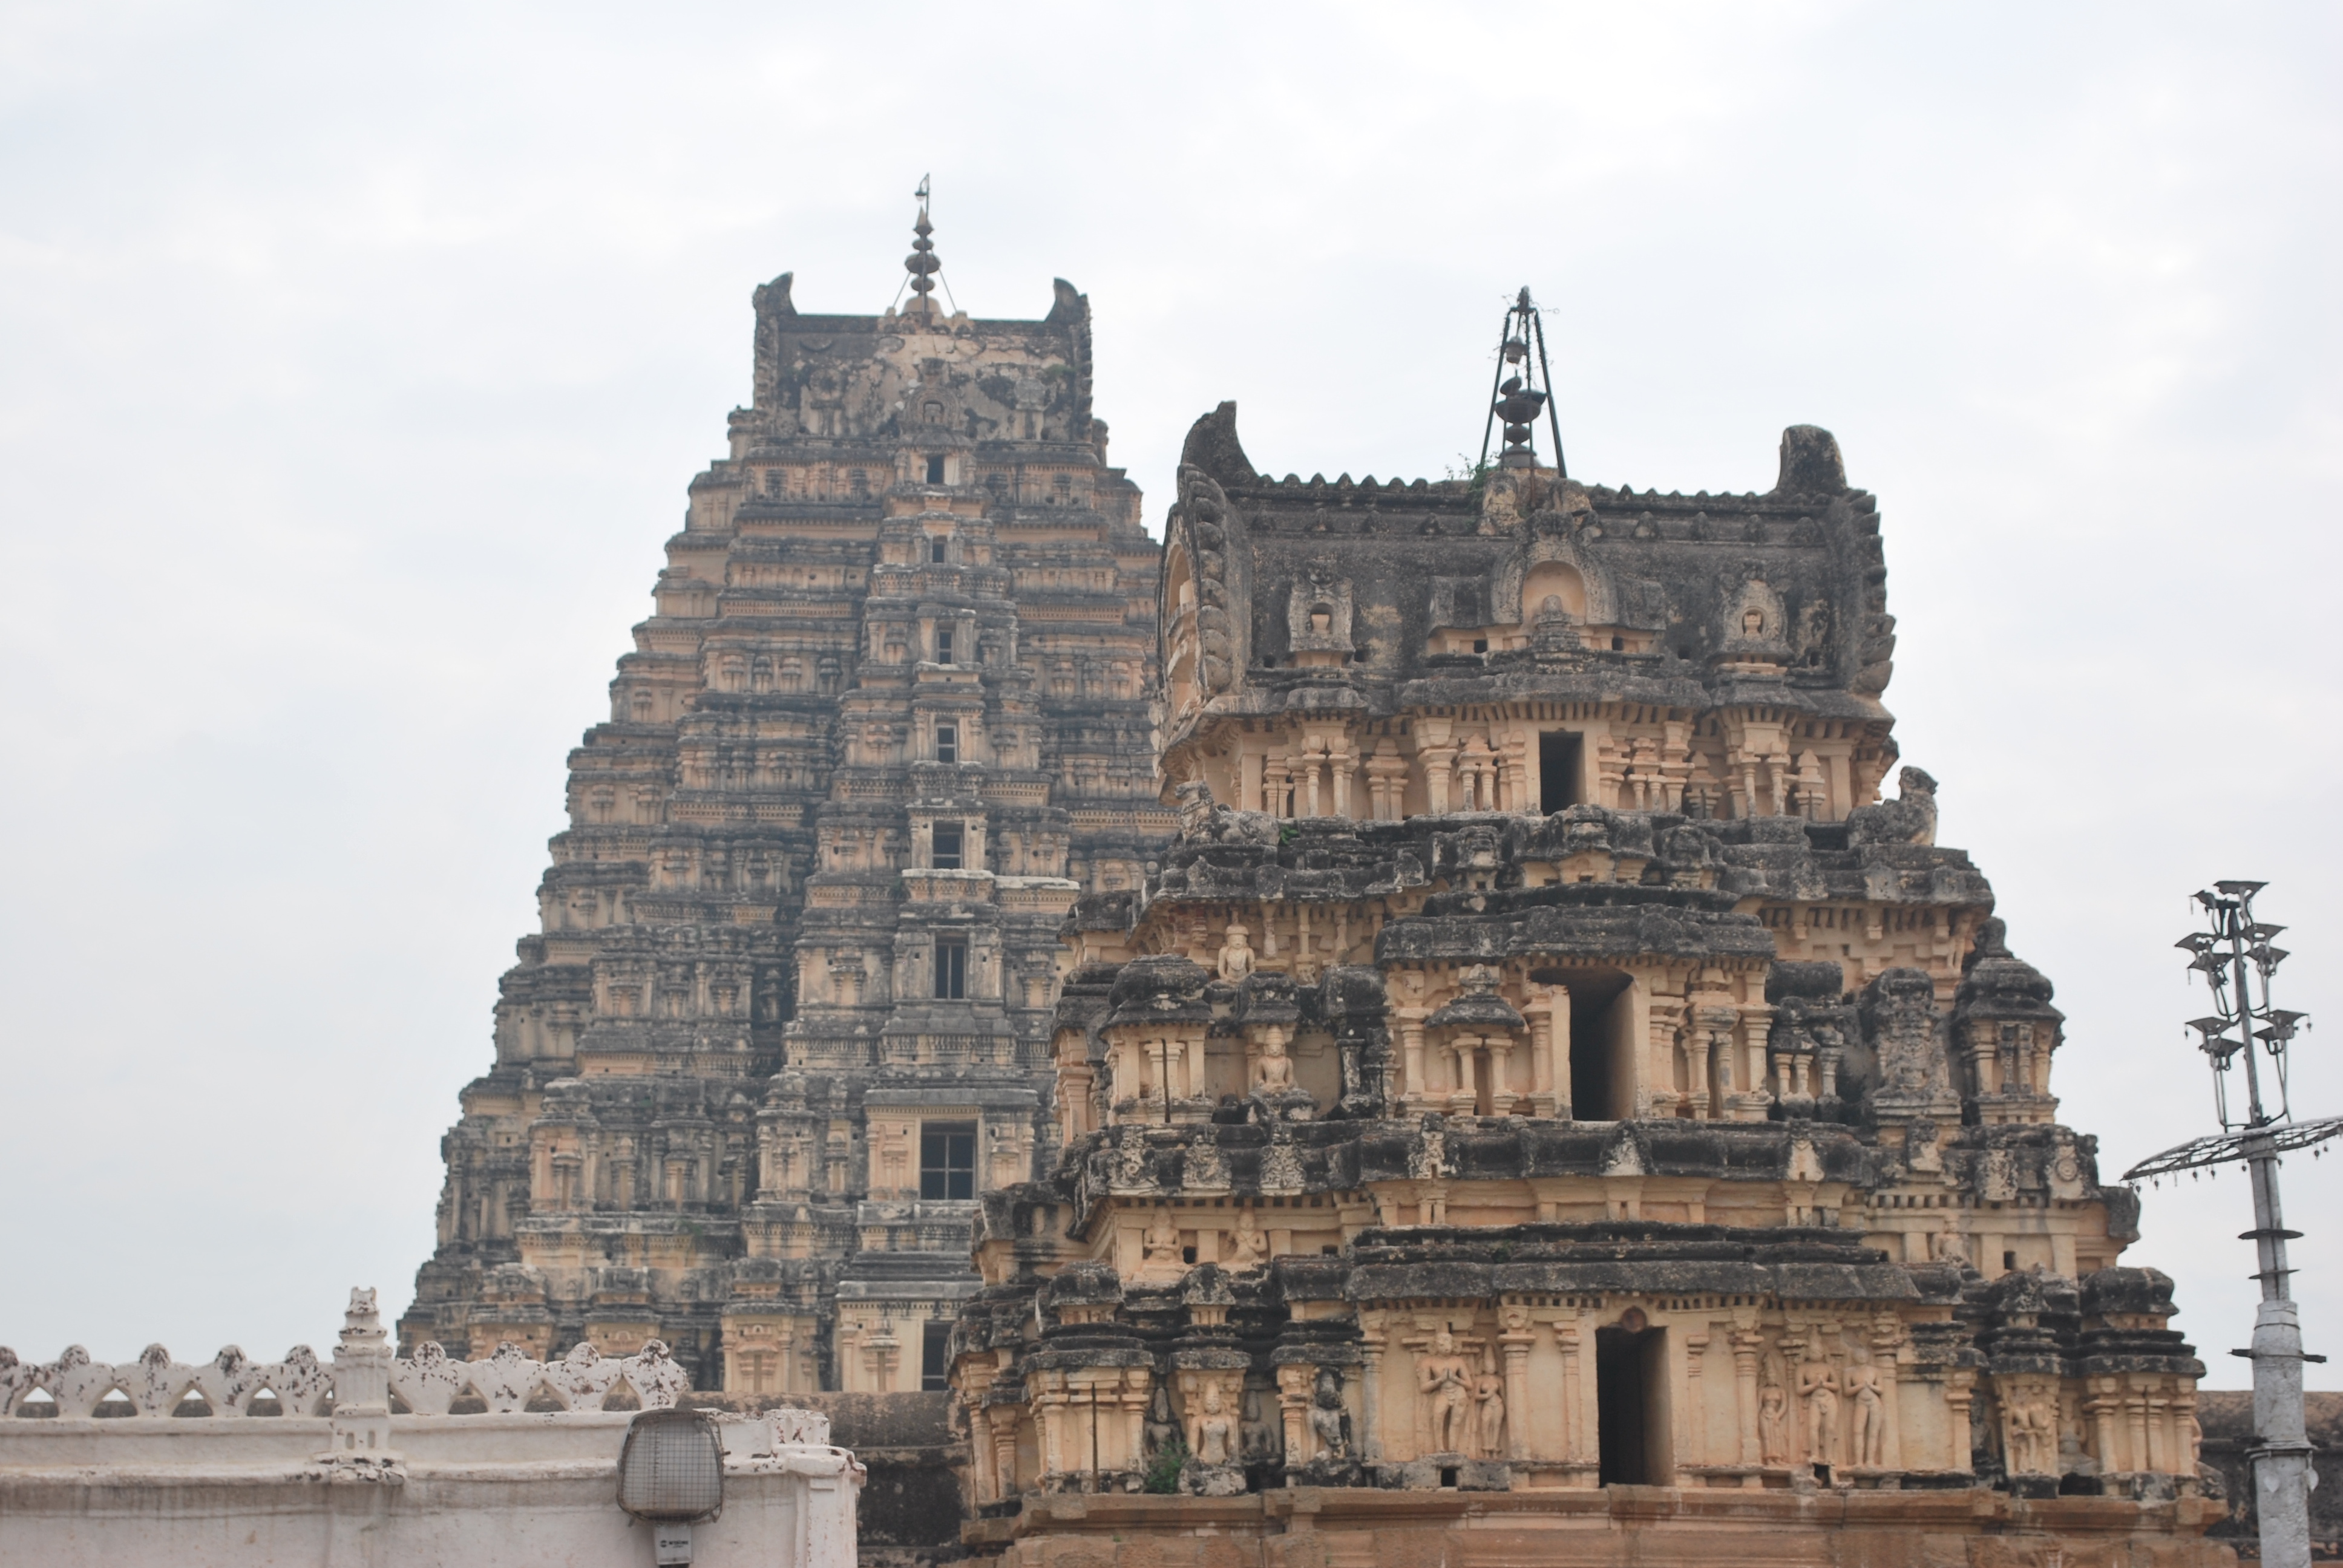 Virupaksha Temple - the twin towers